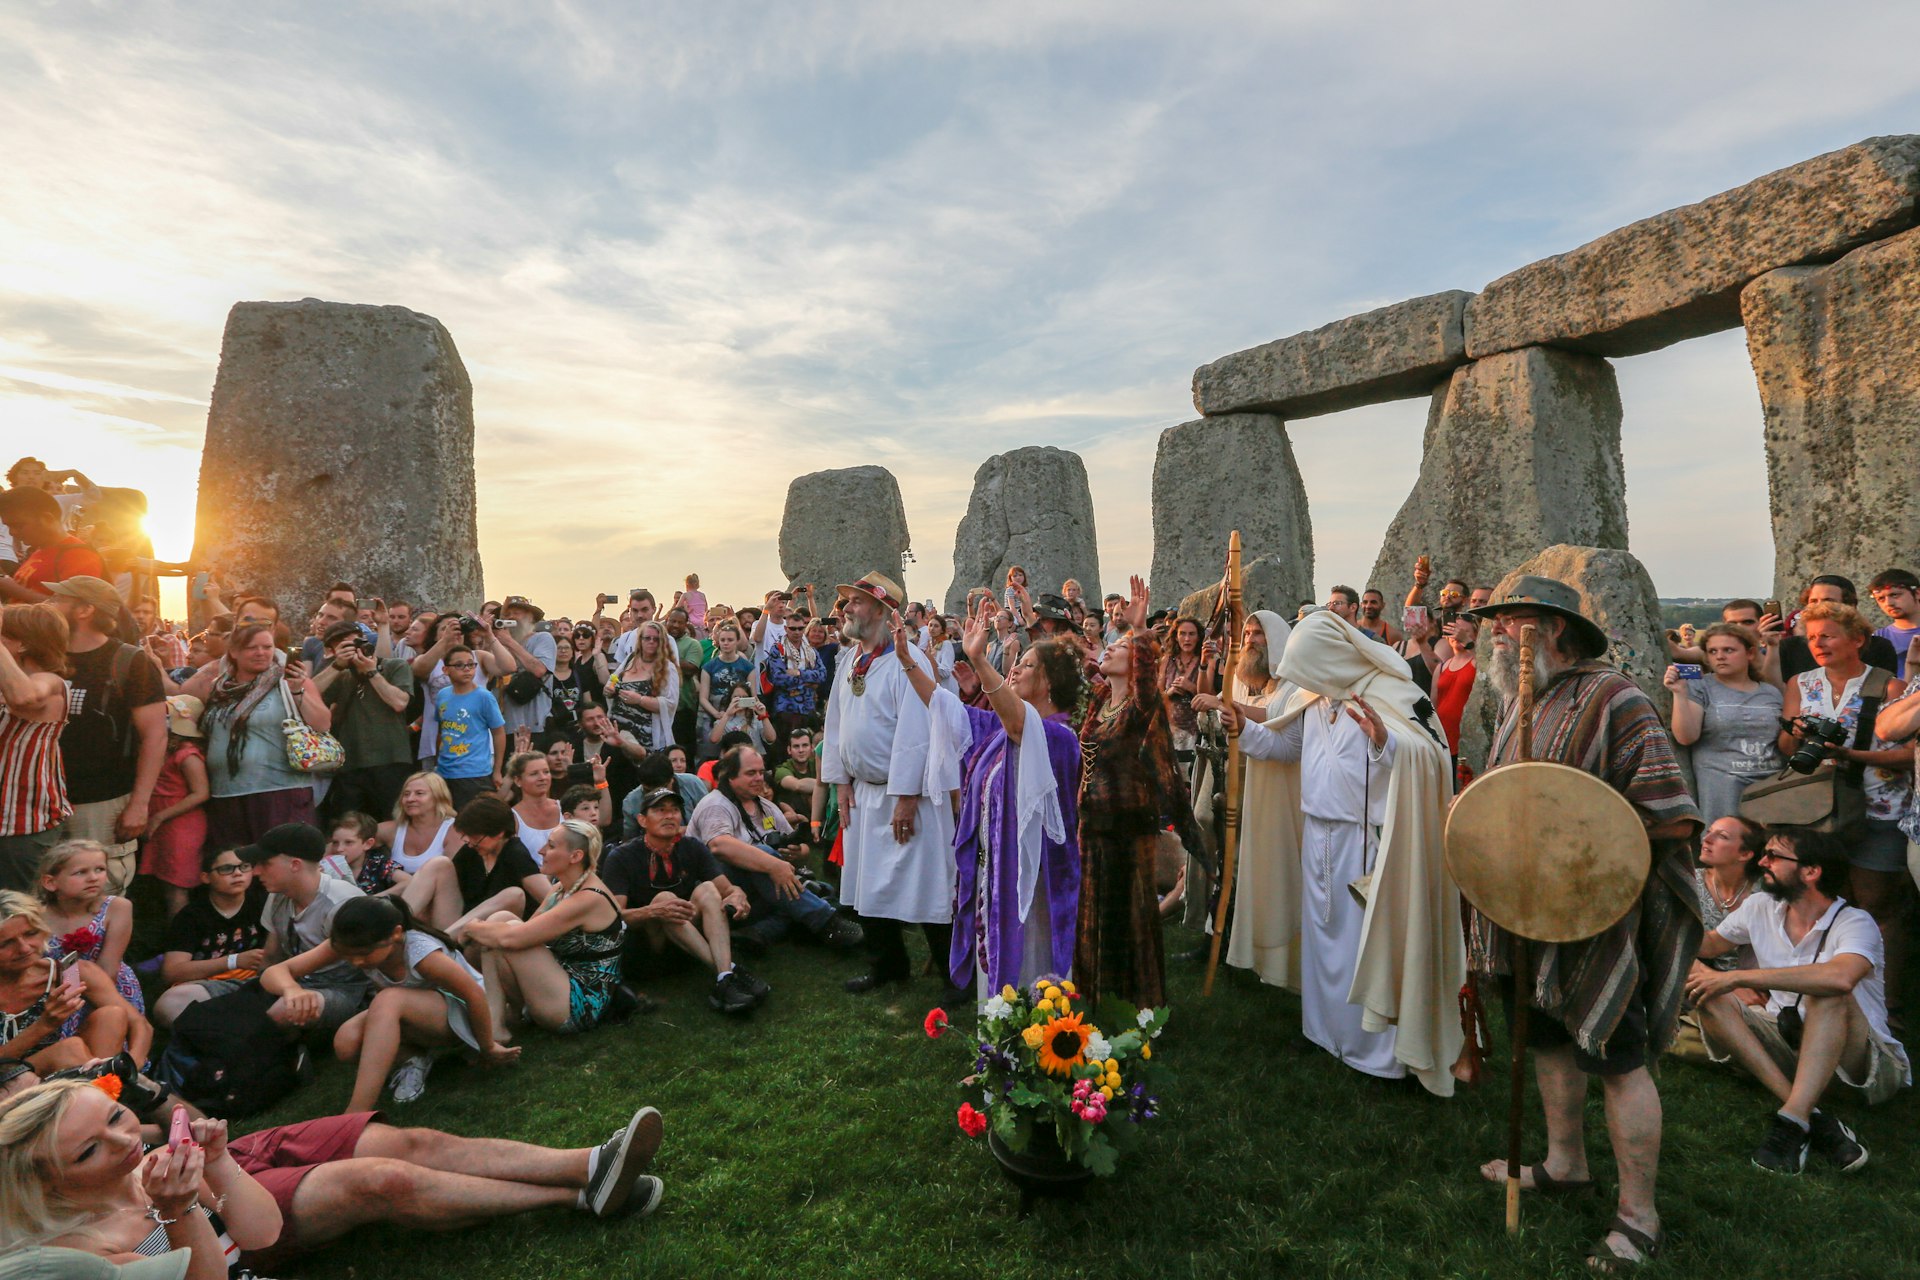 Costumed revelers gather for the summer solstice at Stonehenge, Wilshire, England, United Kingdom